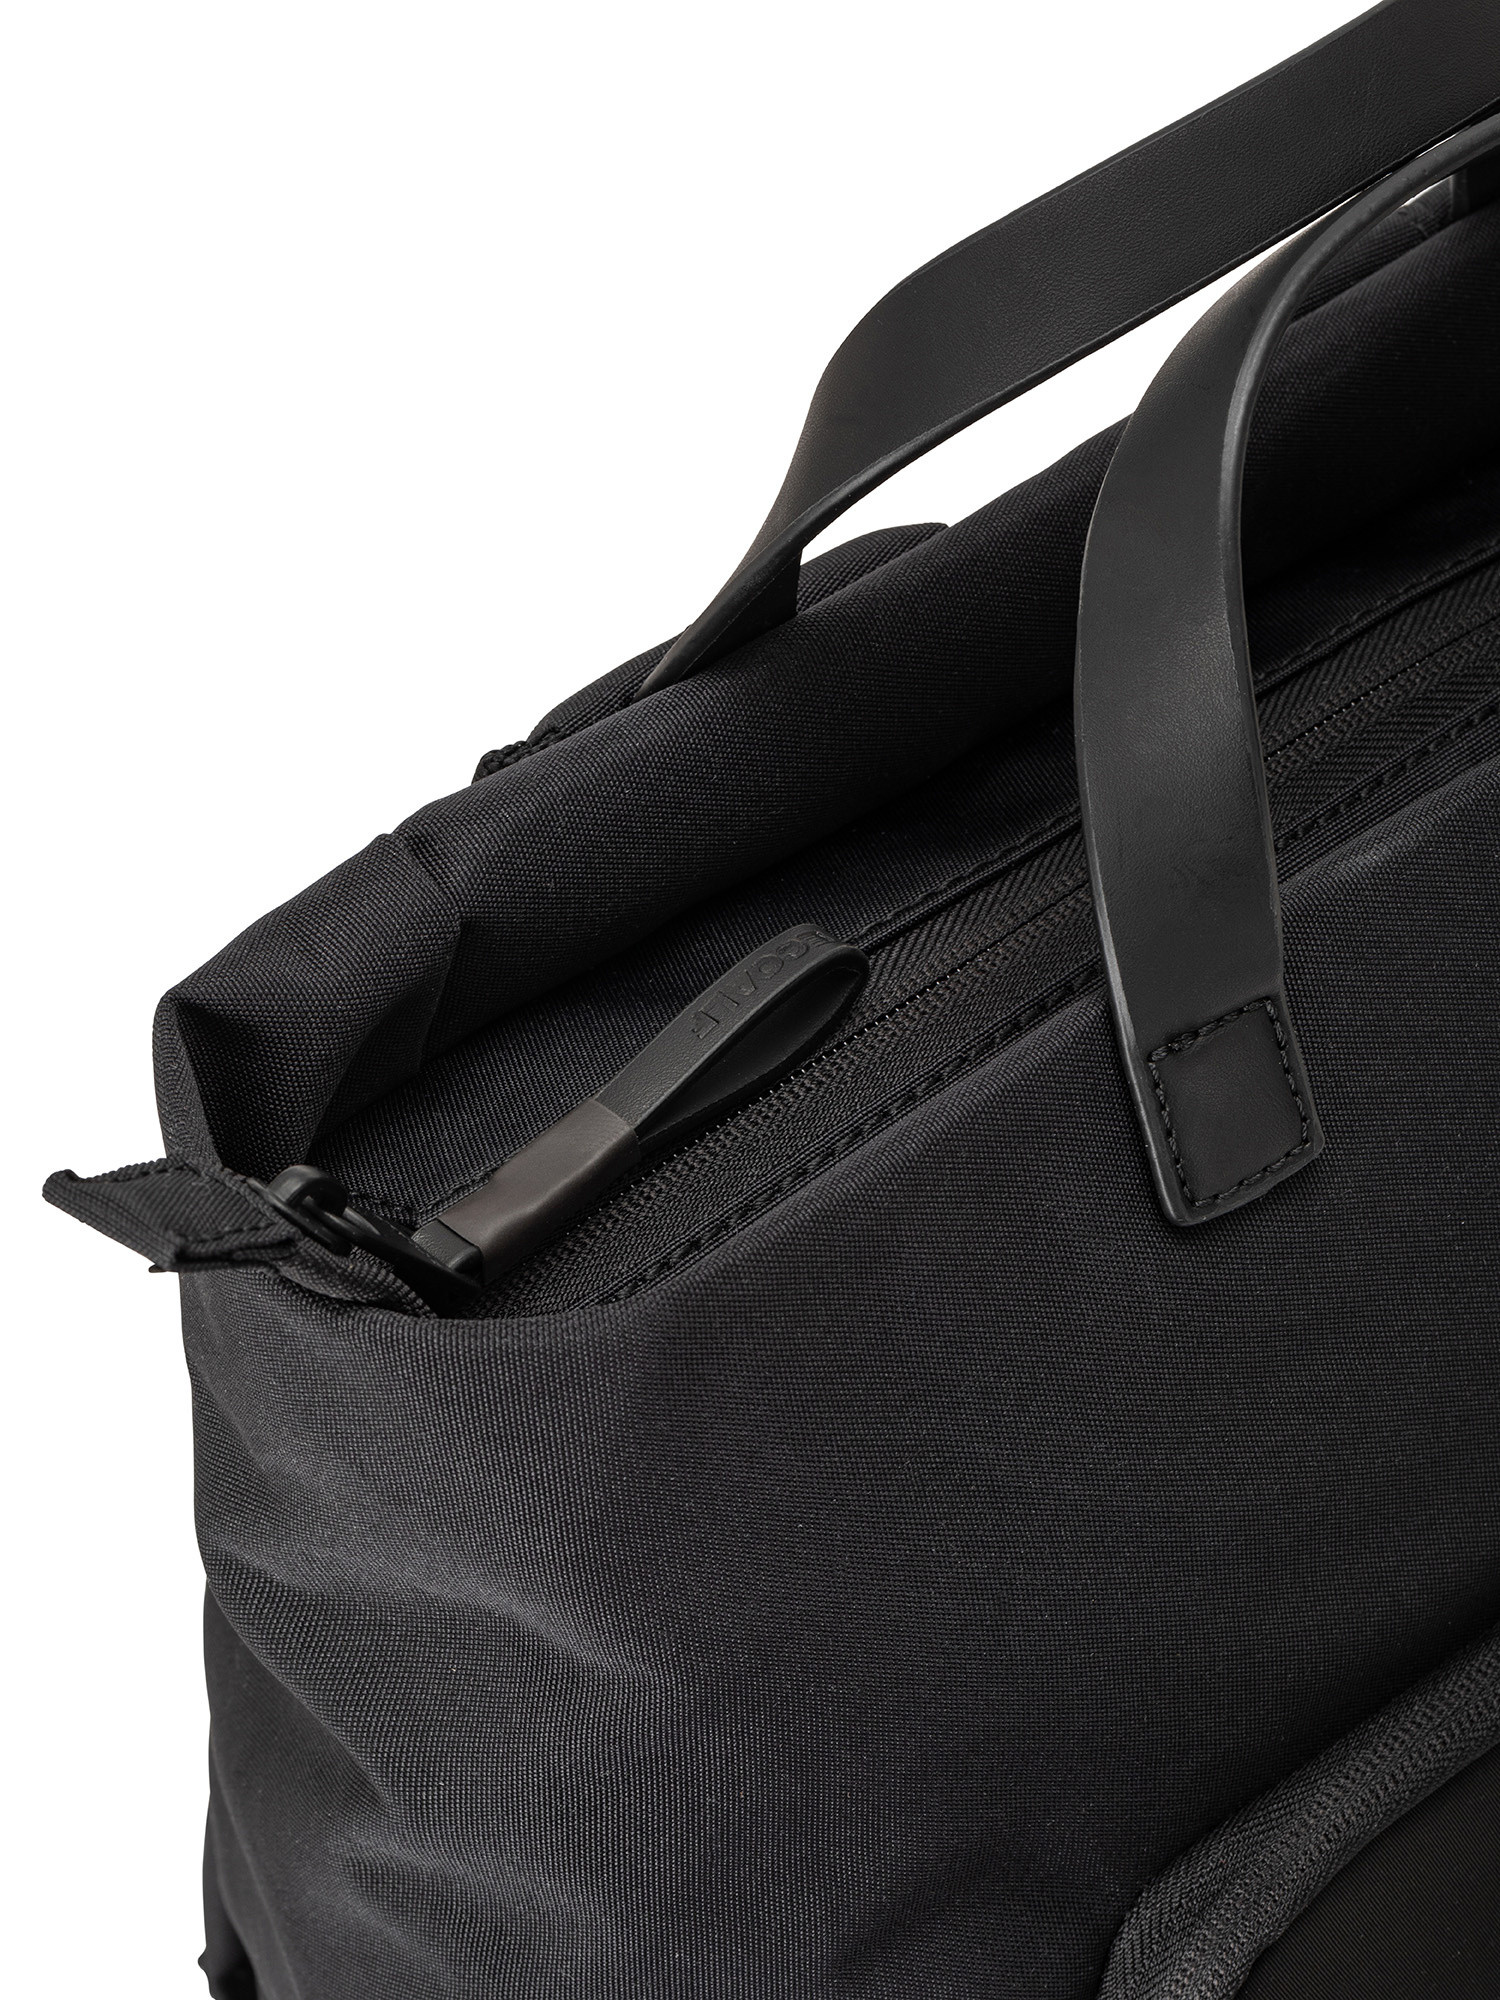 Ecoalf - Saka waterproof backpack, Black, large image number 2